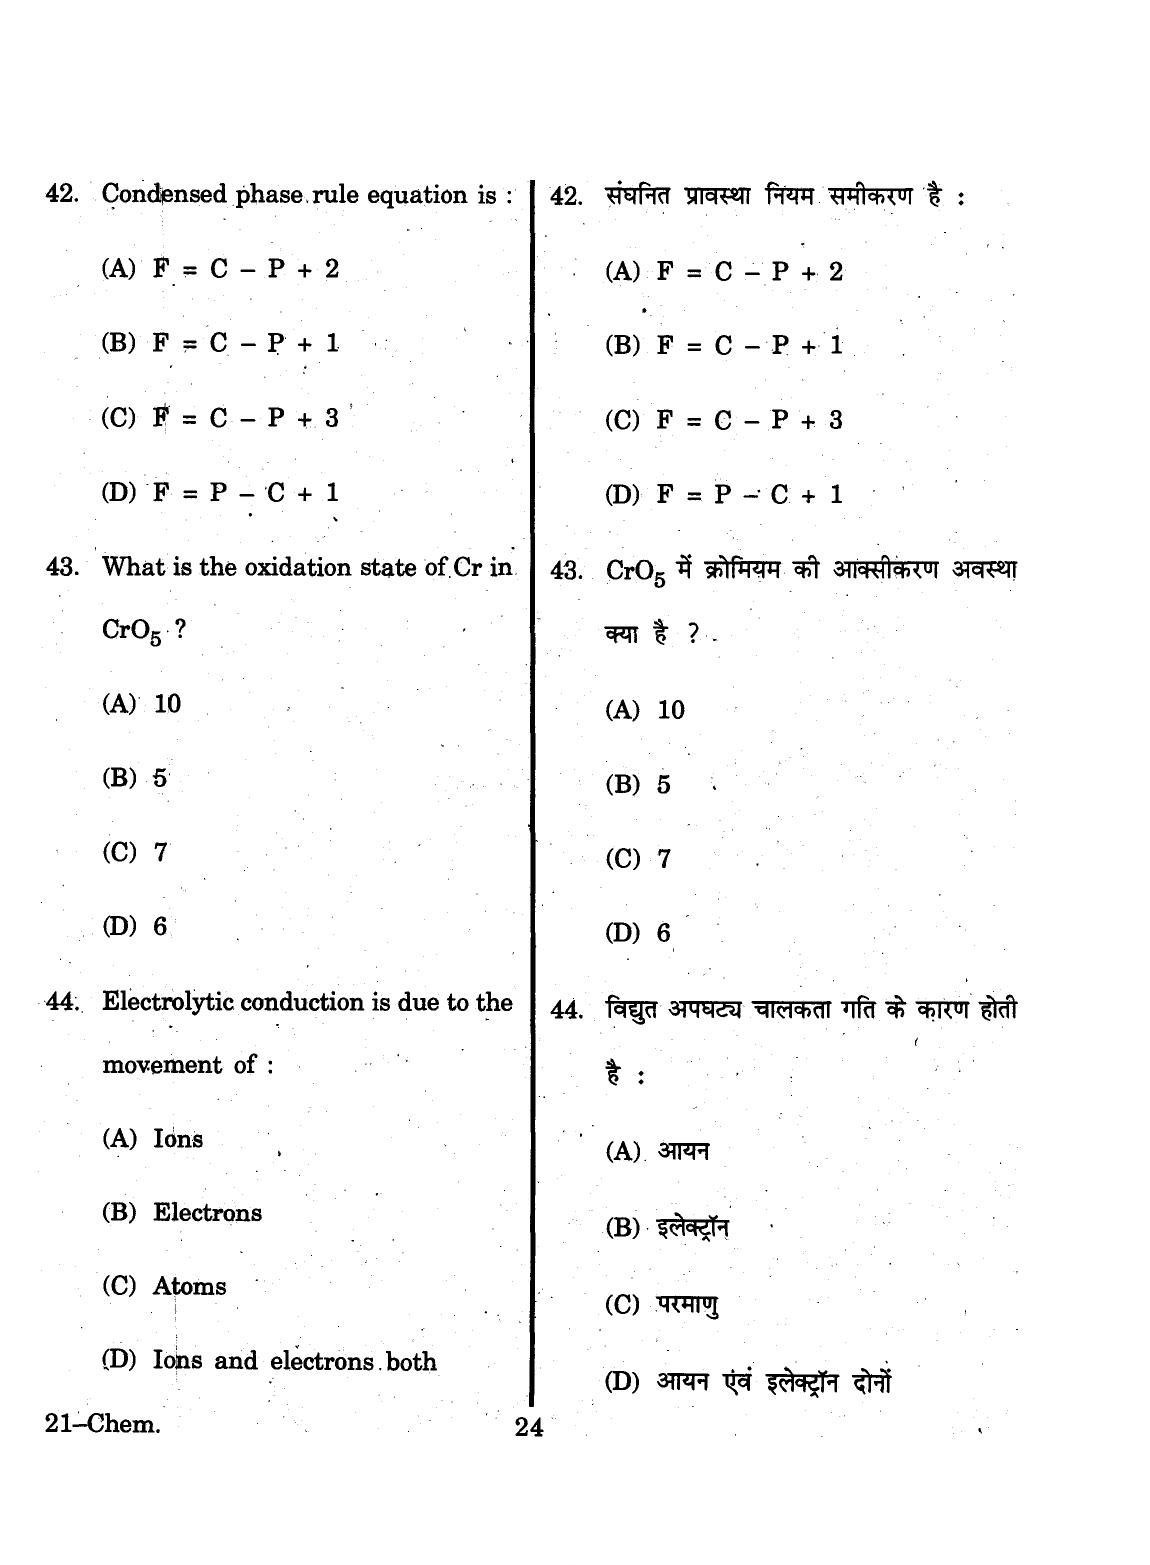 URATPG 2015 Chemisty Question Paper - Page 24